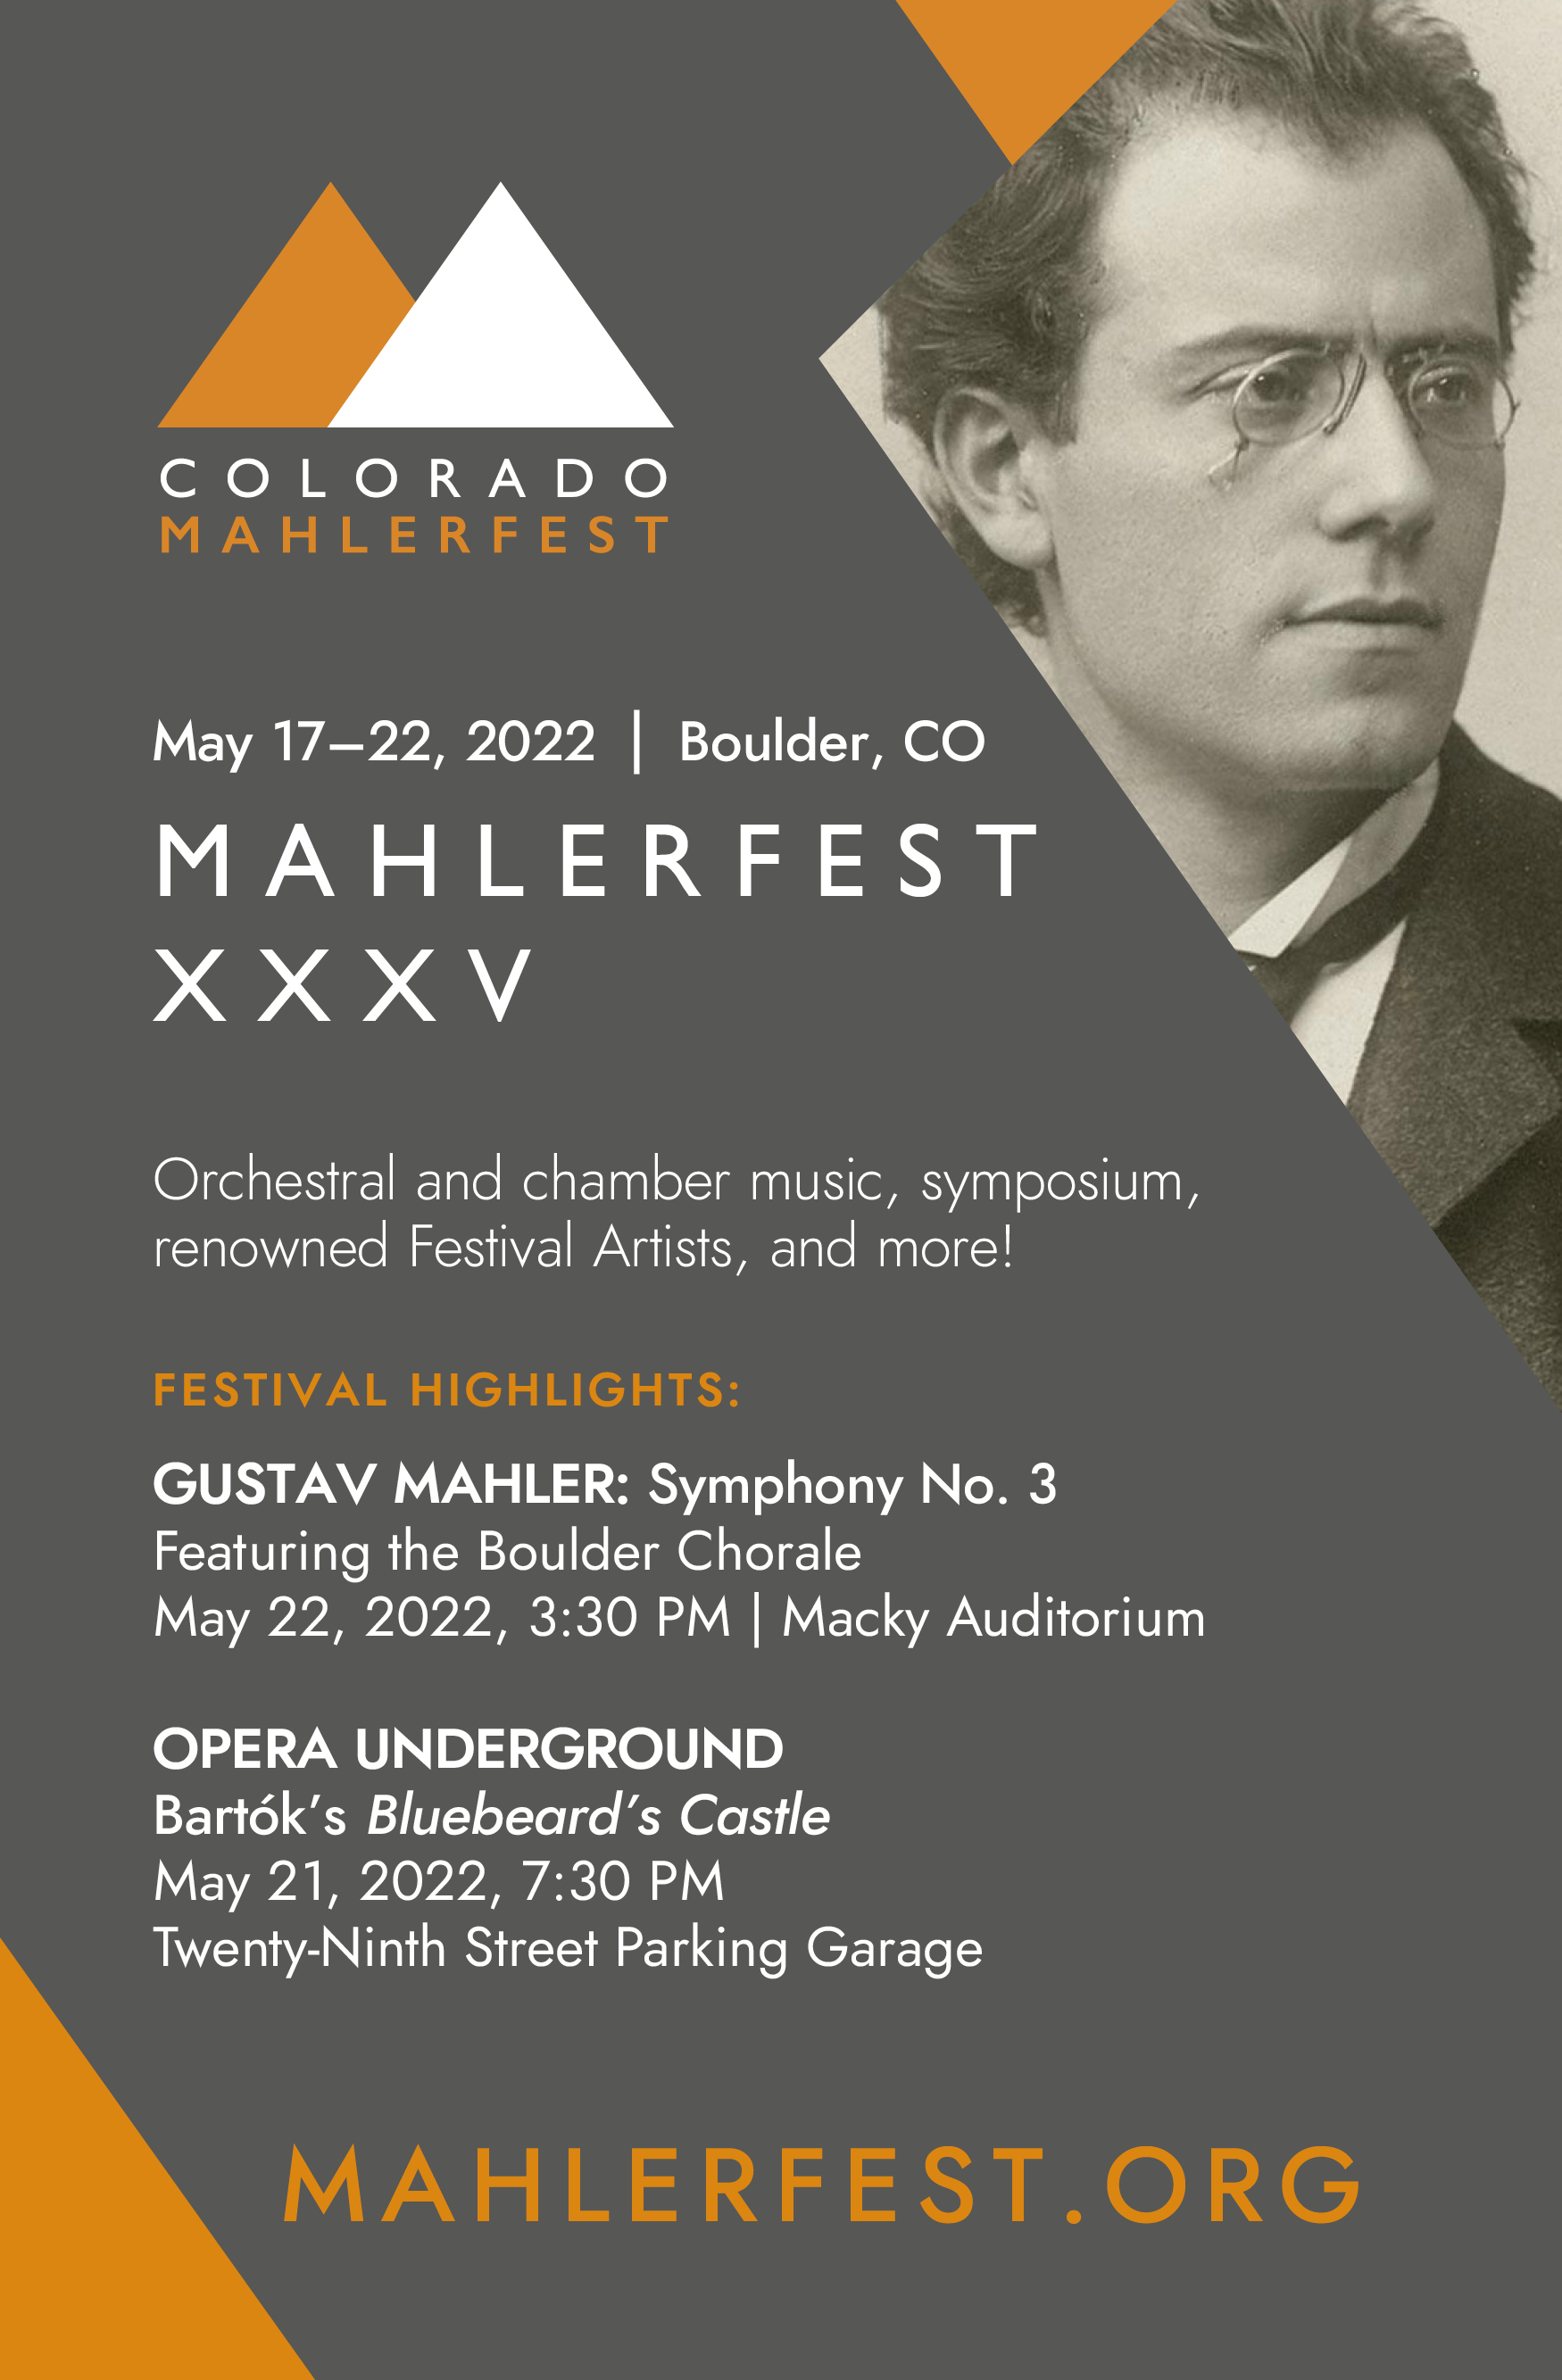 Colorado Mahlerfest